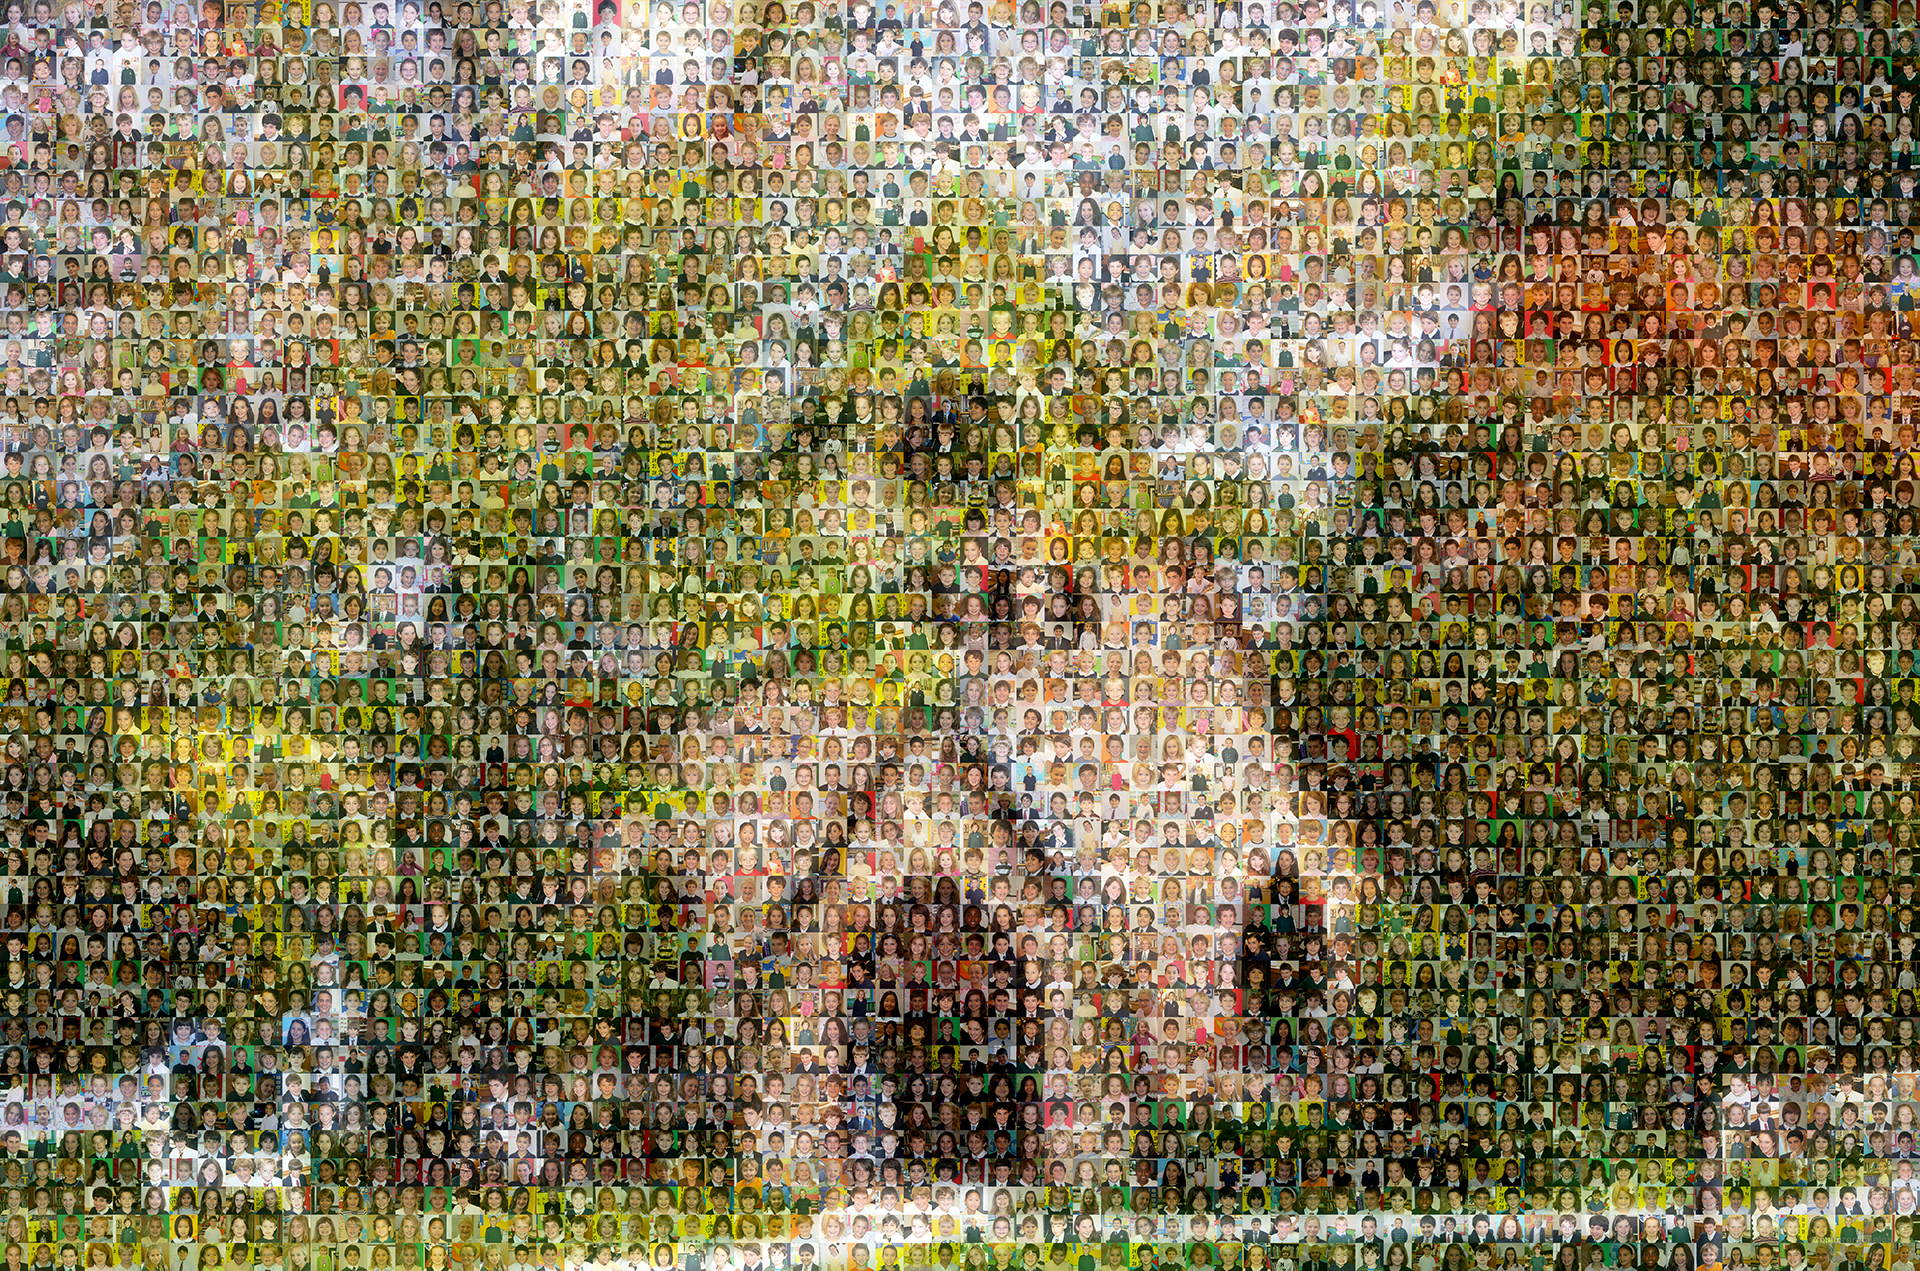 photo mosaic created using 440 child photos